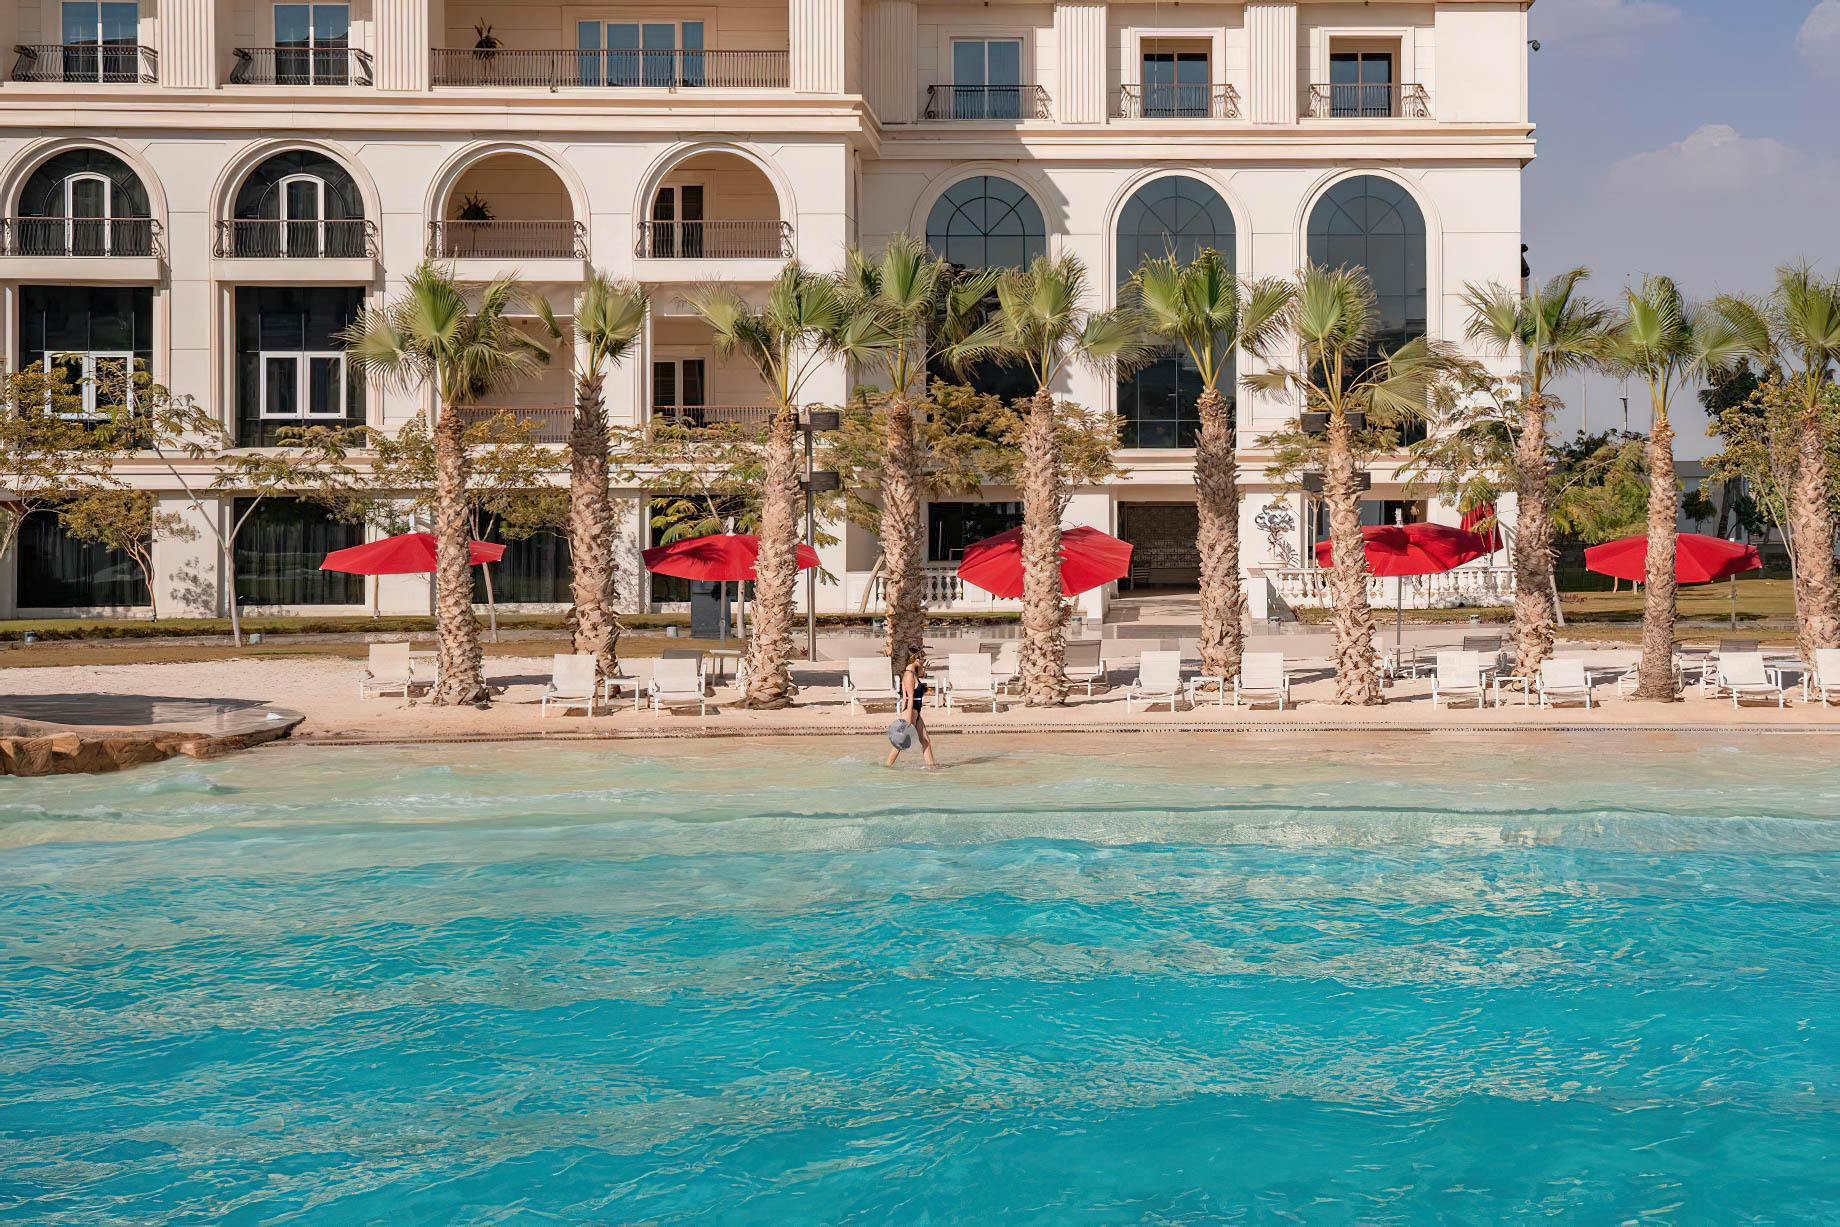 The St. Regis Almasa Hotel – Cairo, Egypt – Hotel Exterior Pool